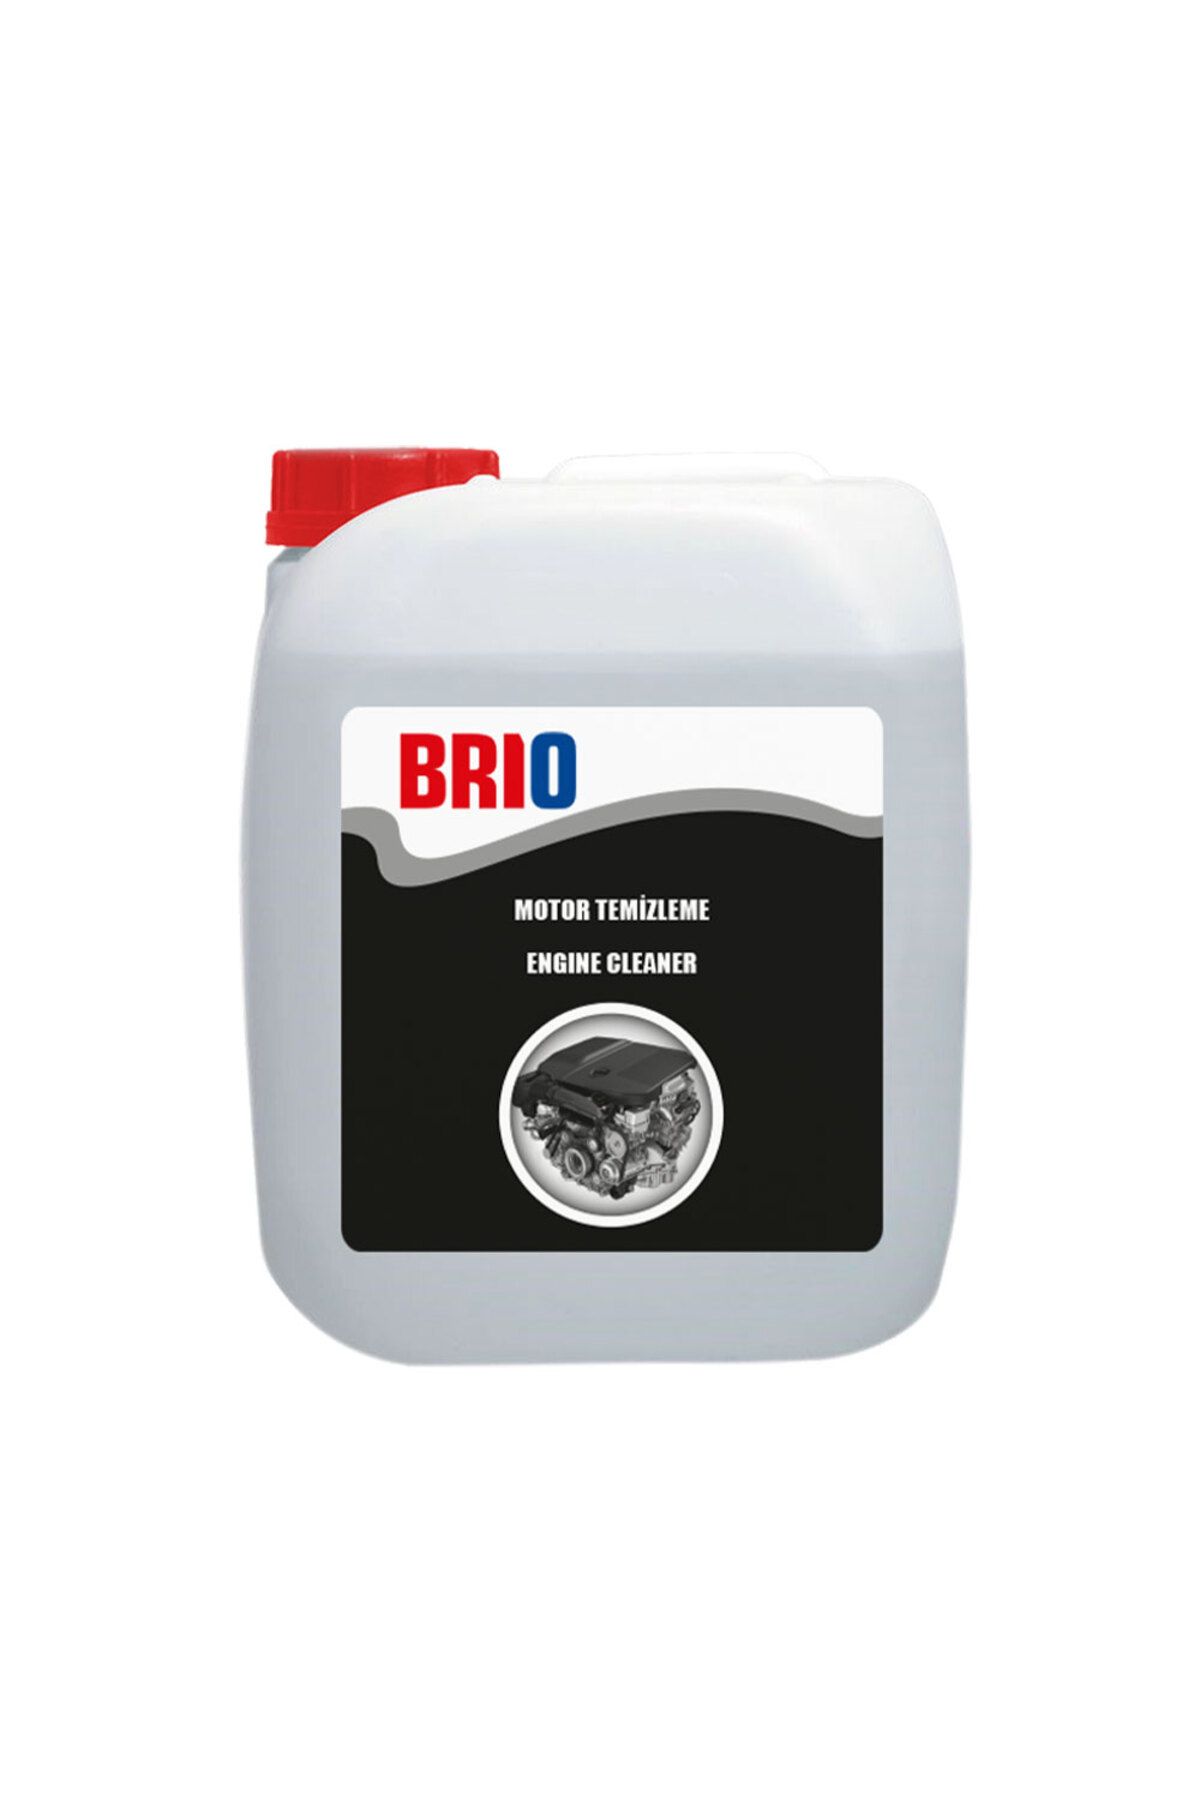 Brio Motor-branda-panelvan Araç Temizleme 35 L